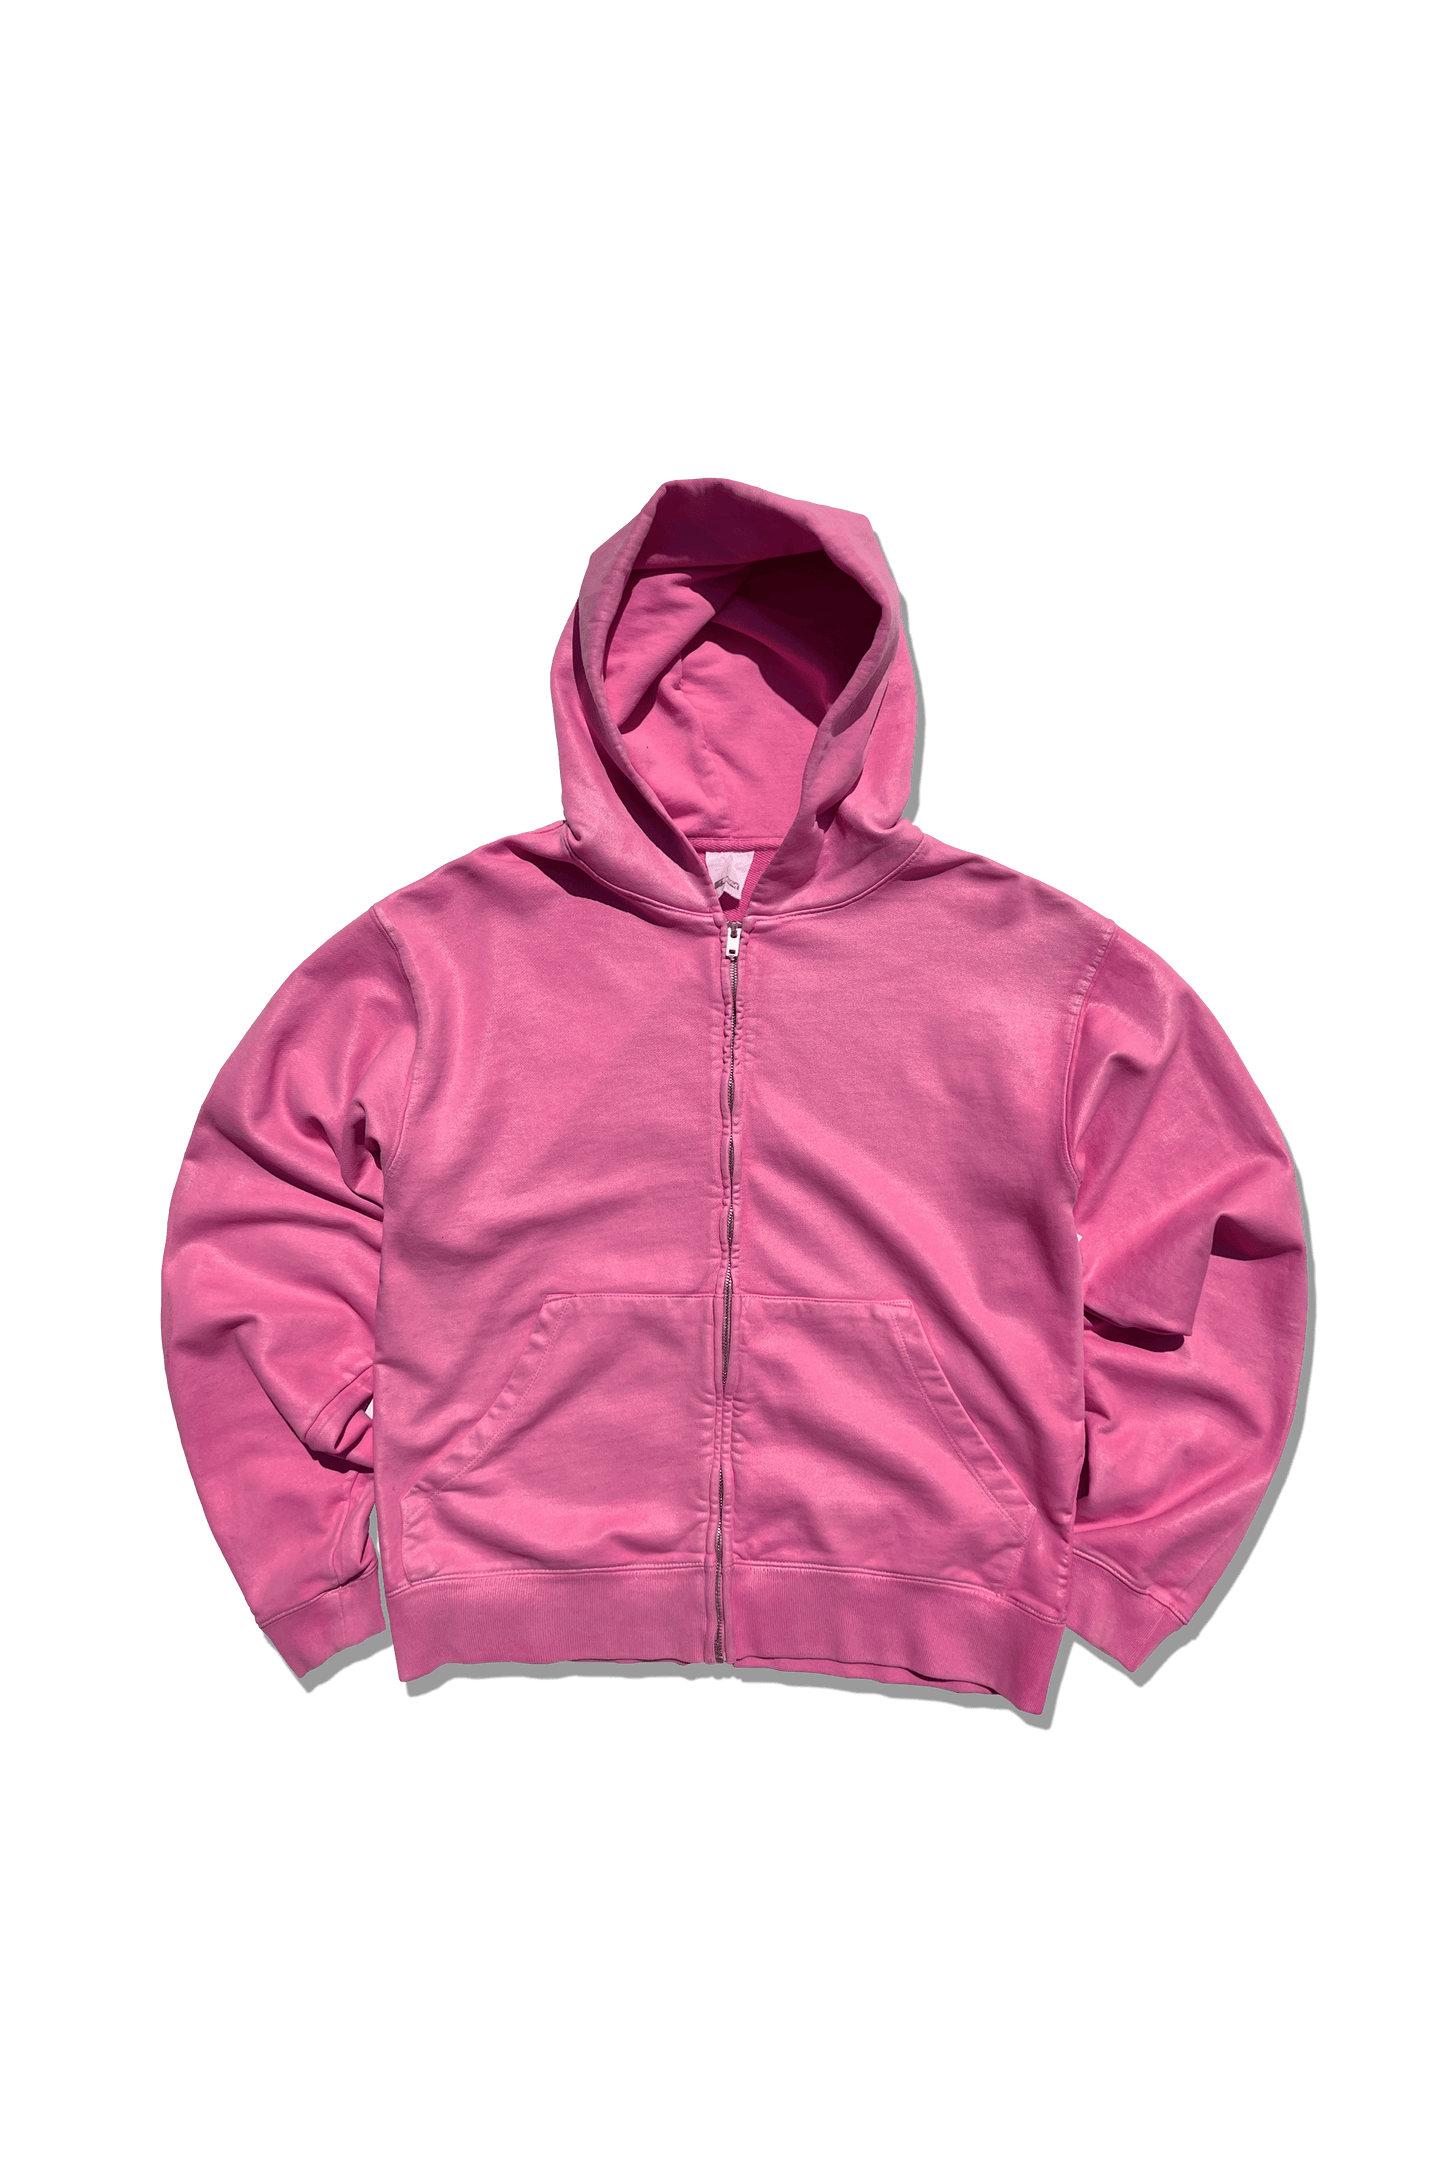 Exclusive Cross Country Zip Hoodie - Plastic Pink